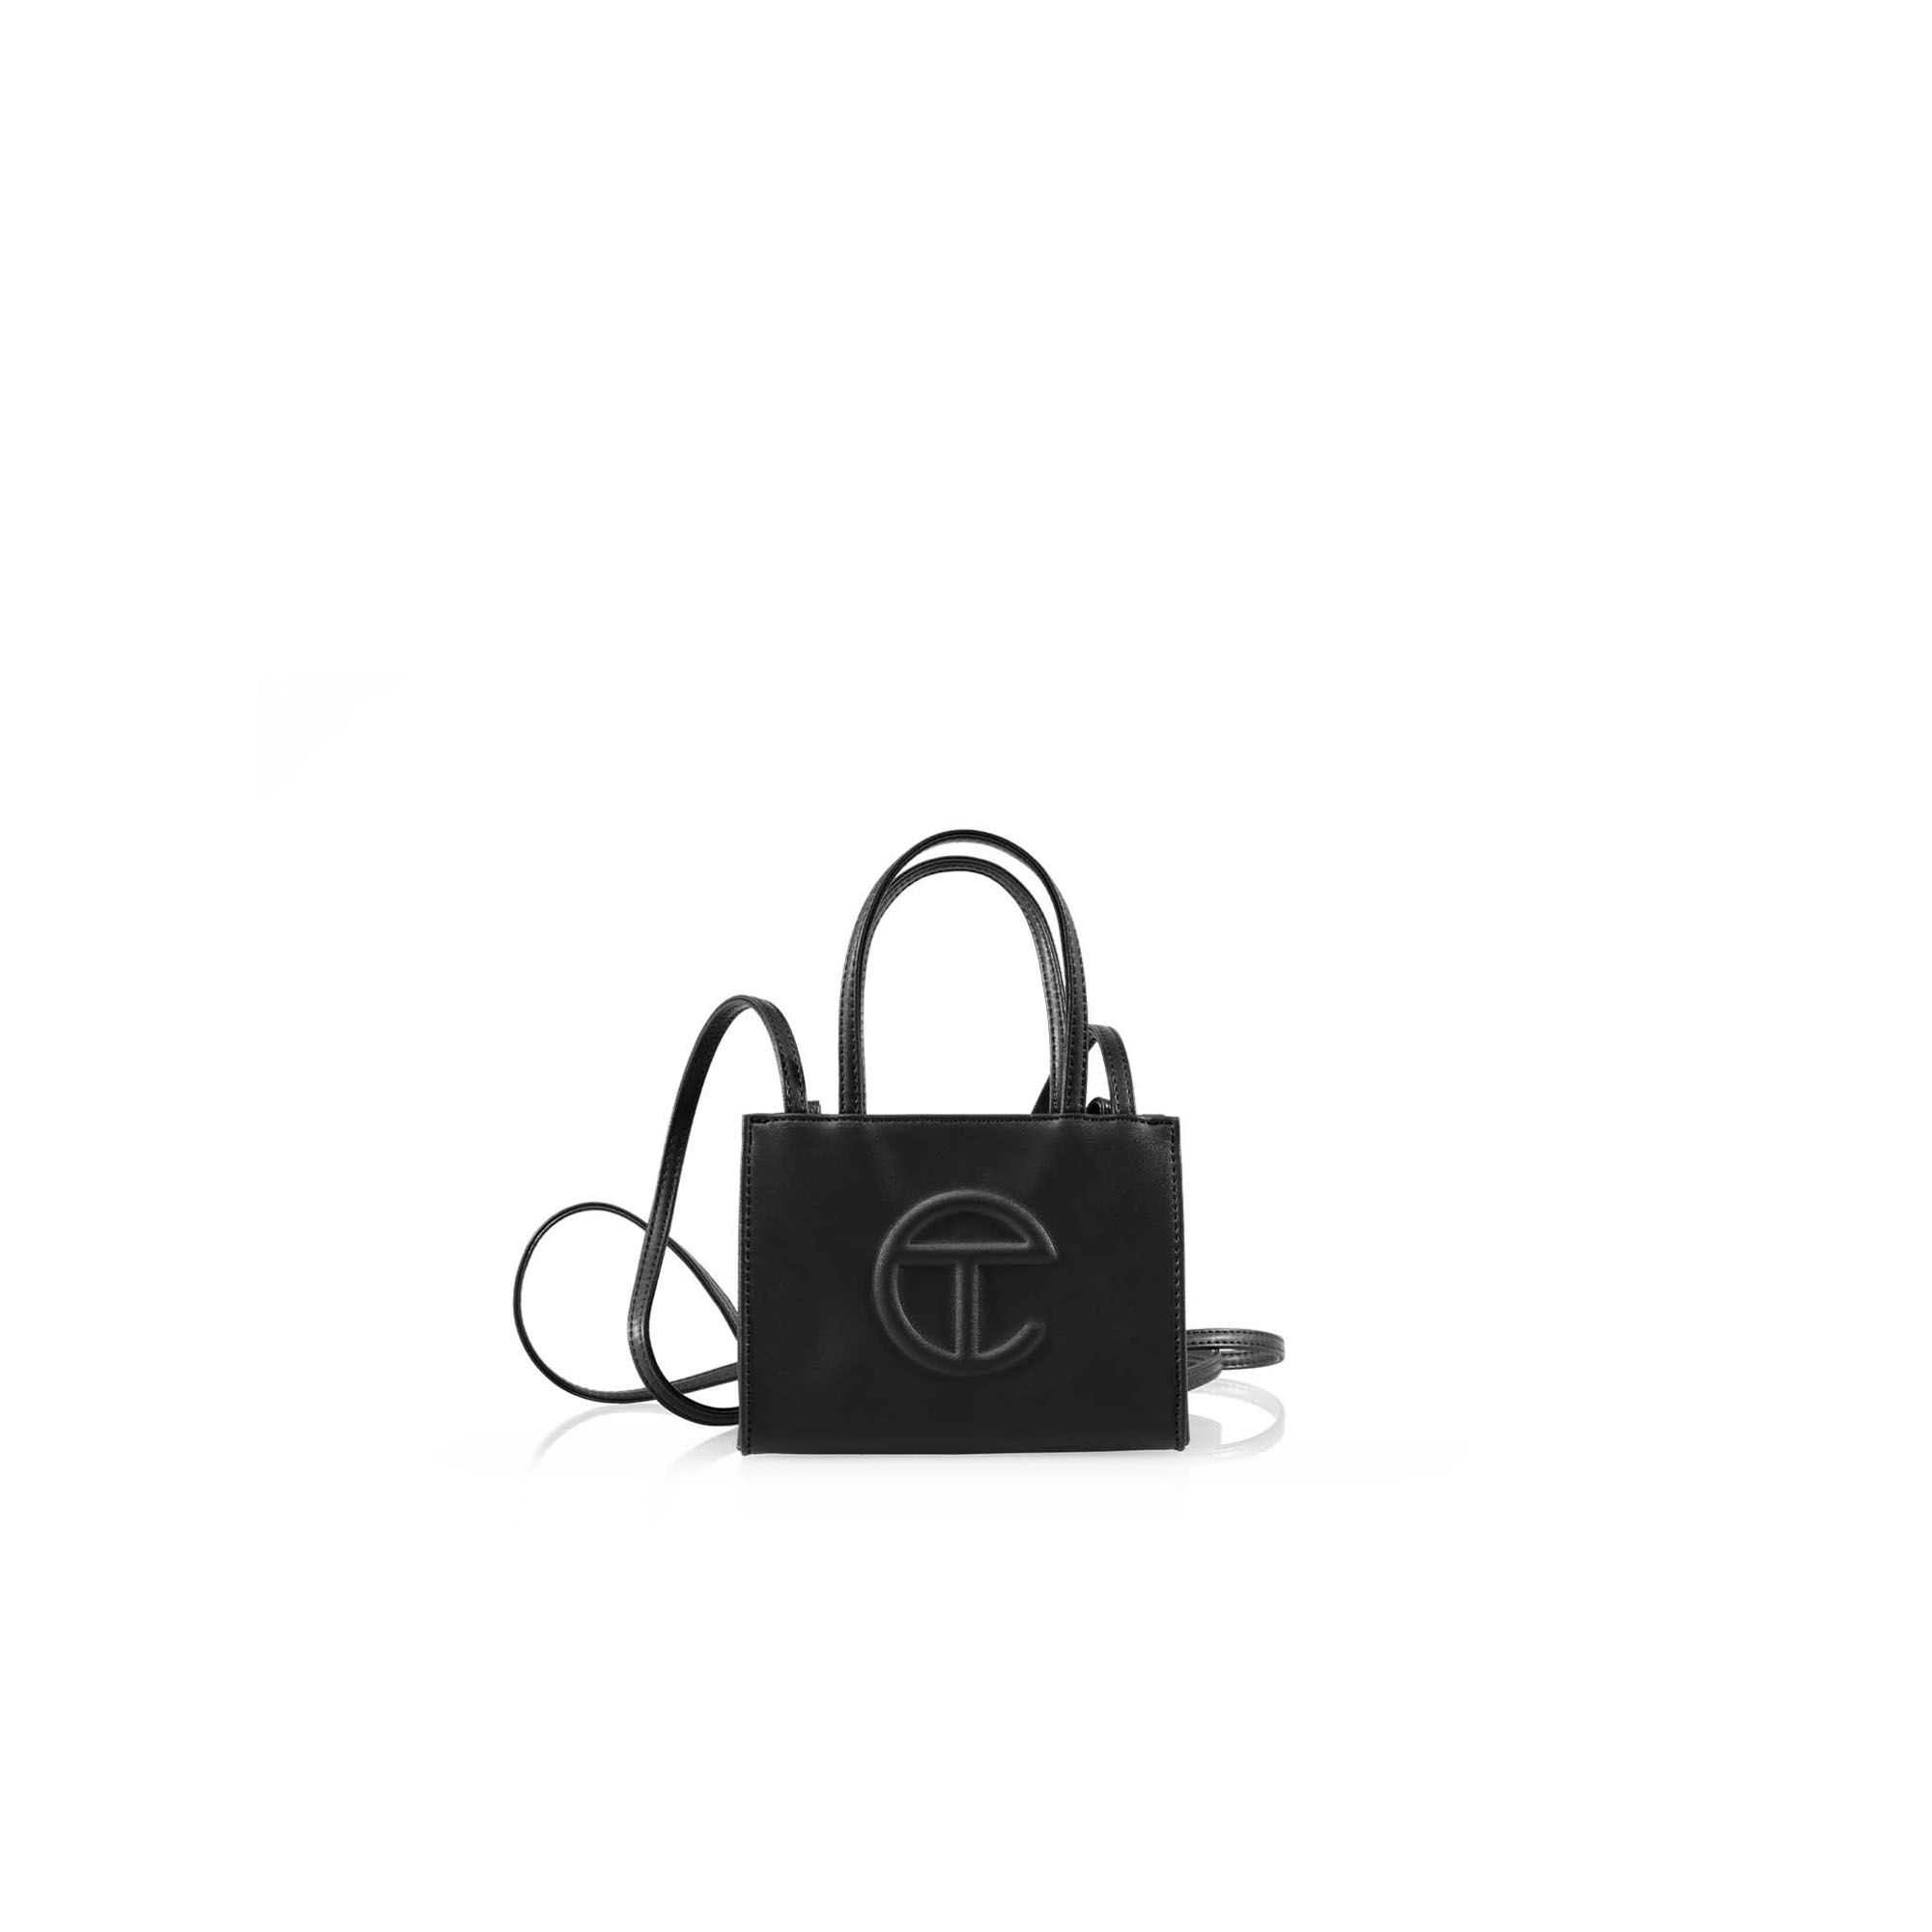  Telfar Small Shopping Bag - Black 